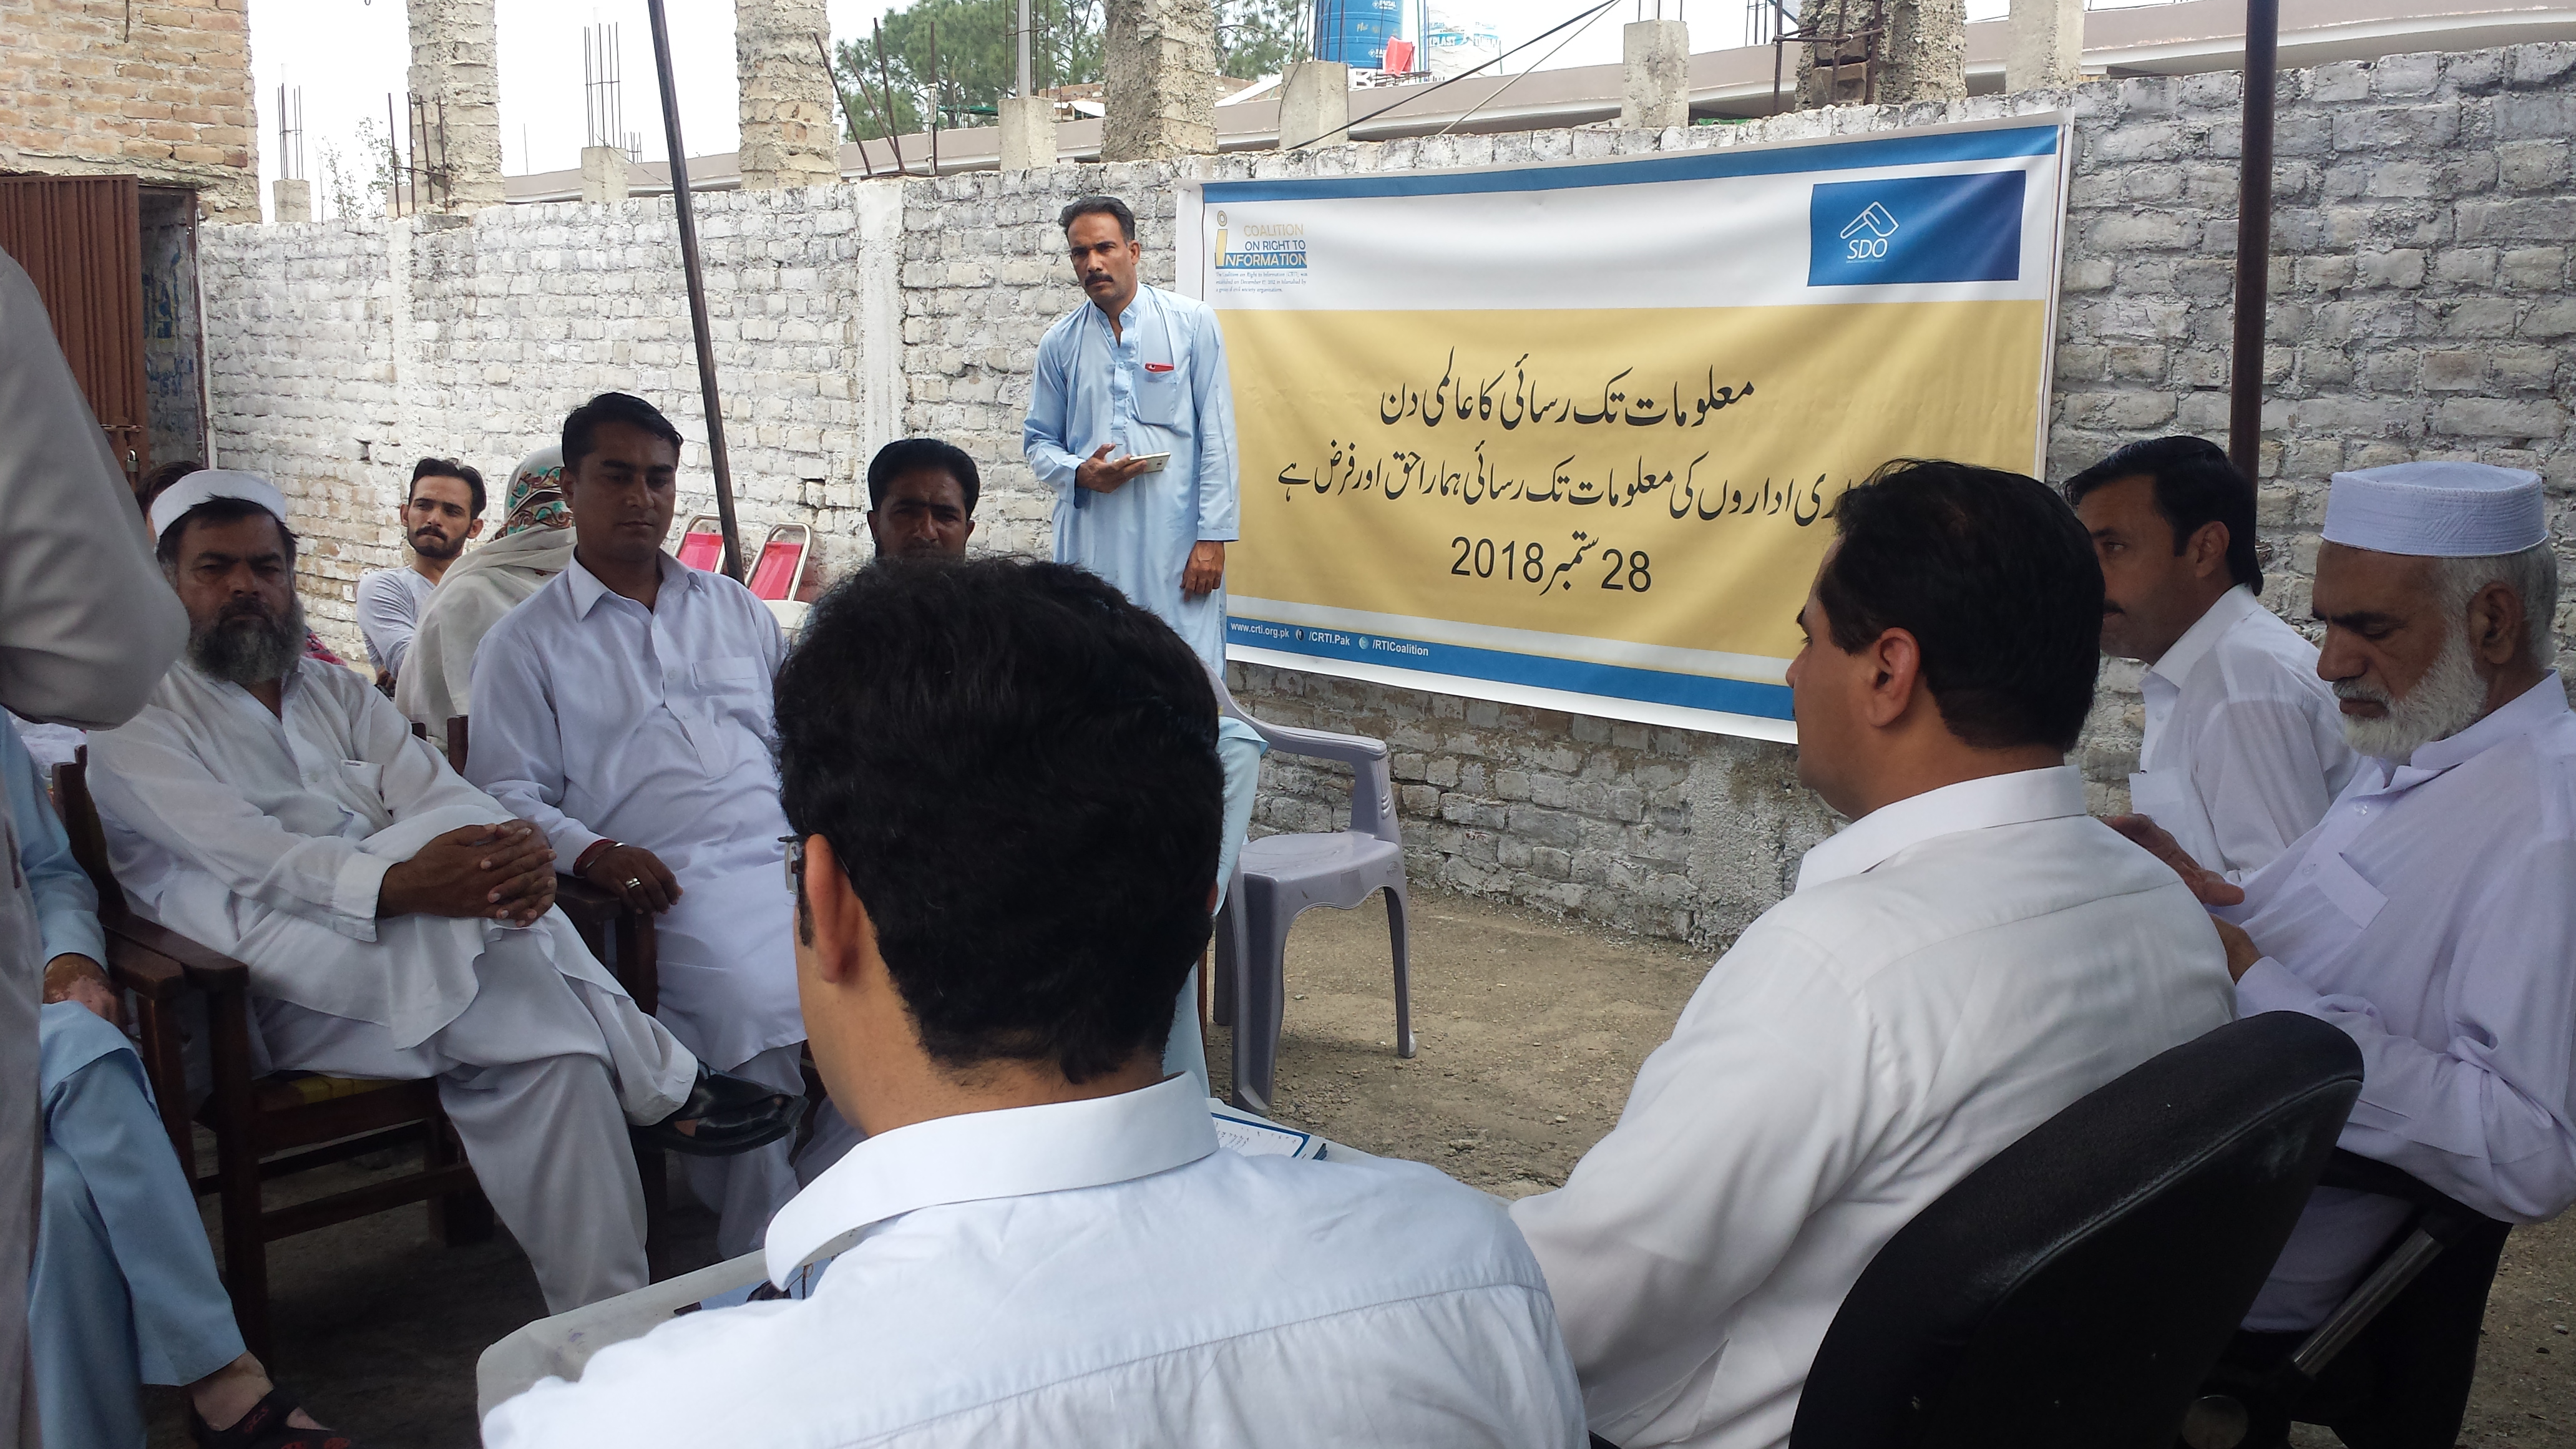 Saiban development organization held an awareness session with community in Mardan